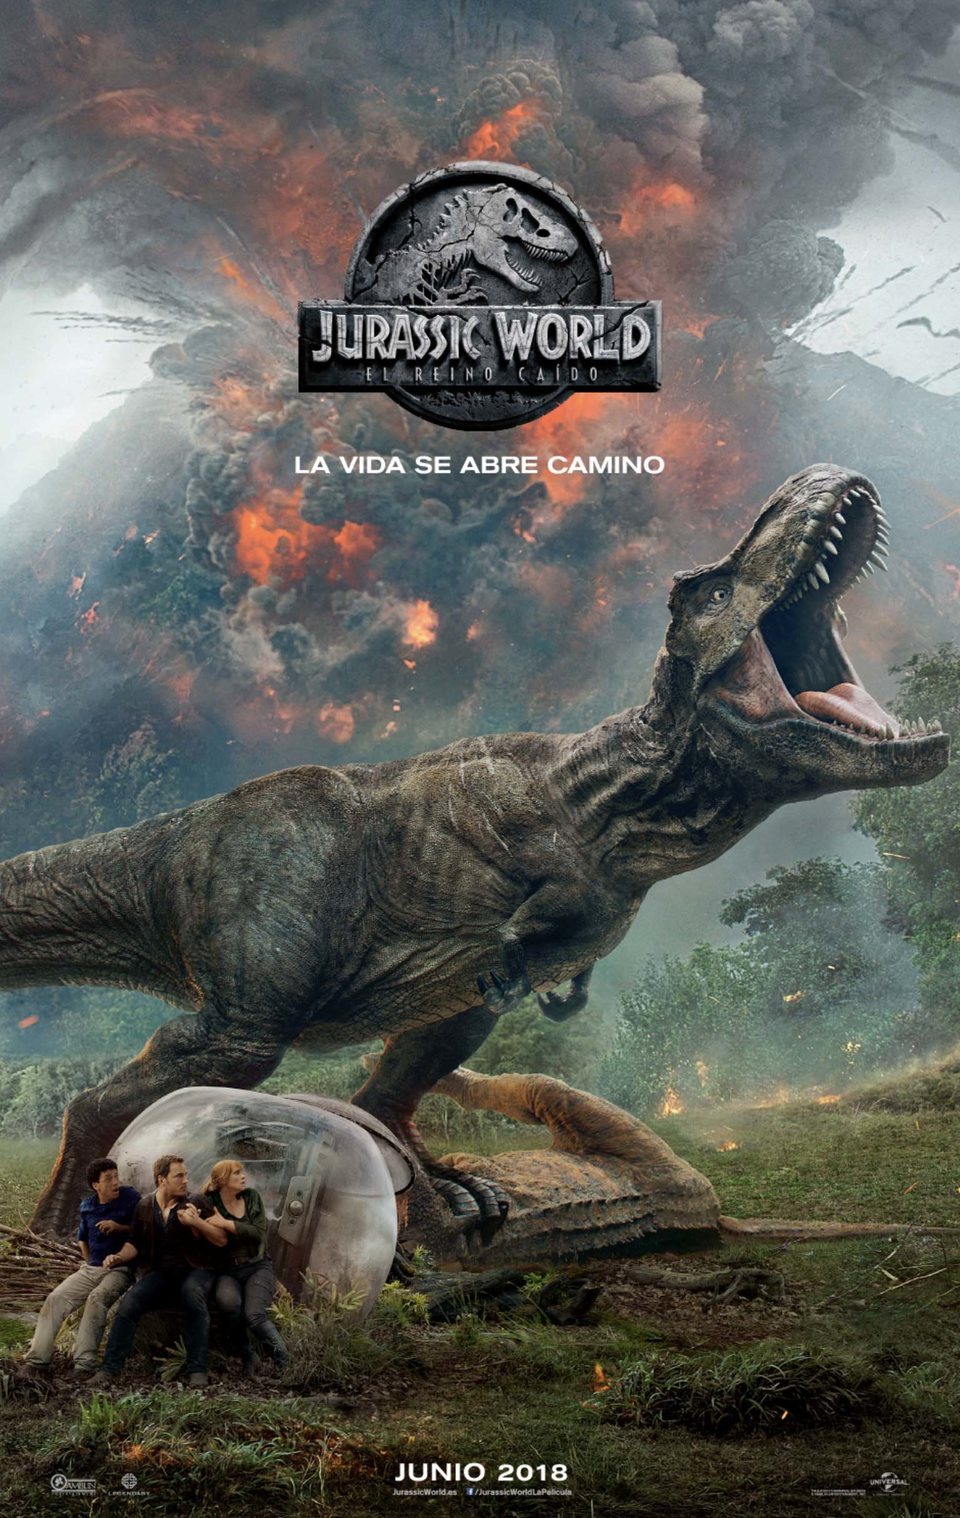 Jurassic World, el reino caído